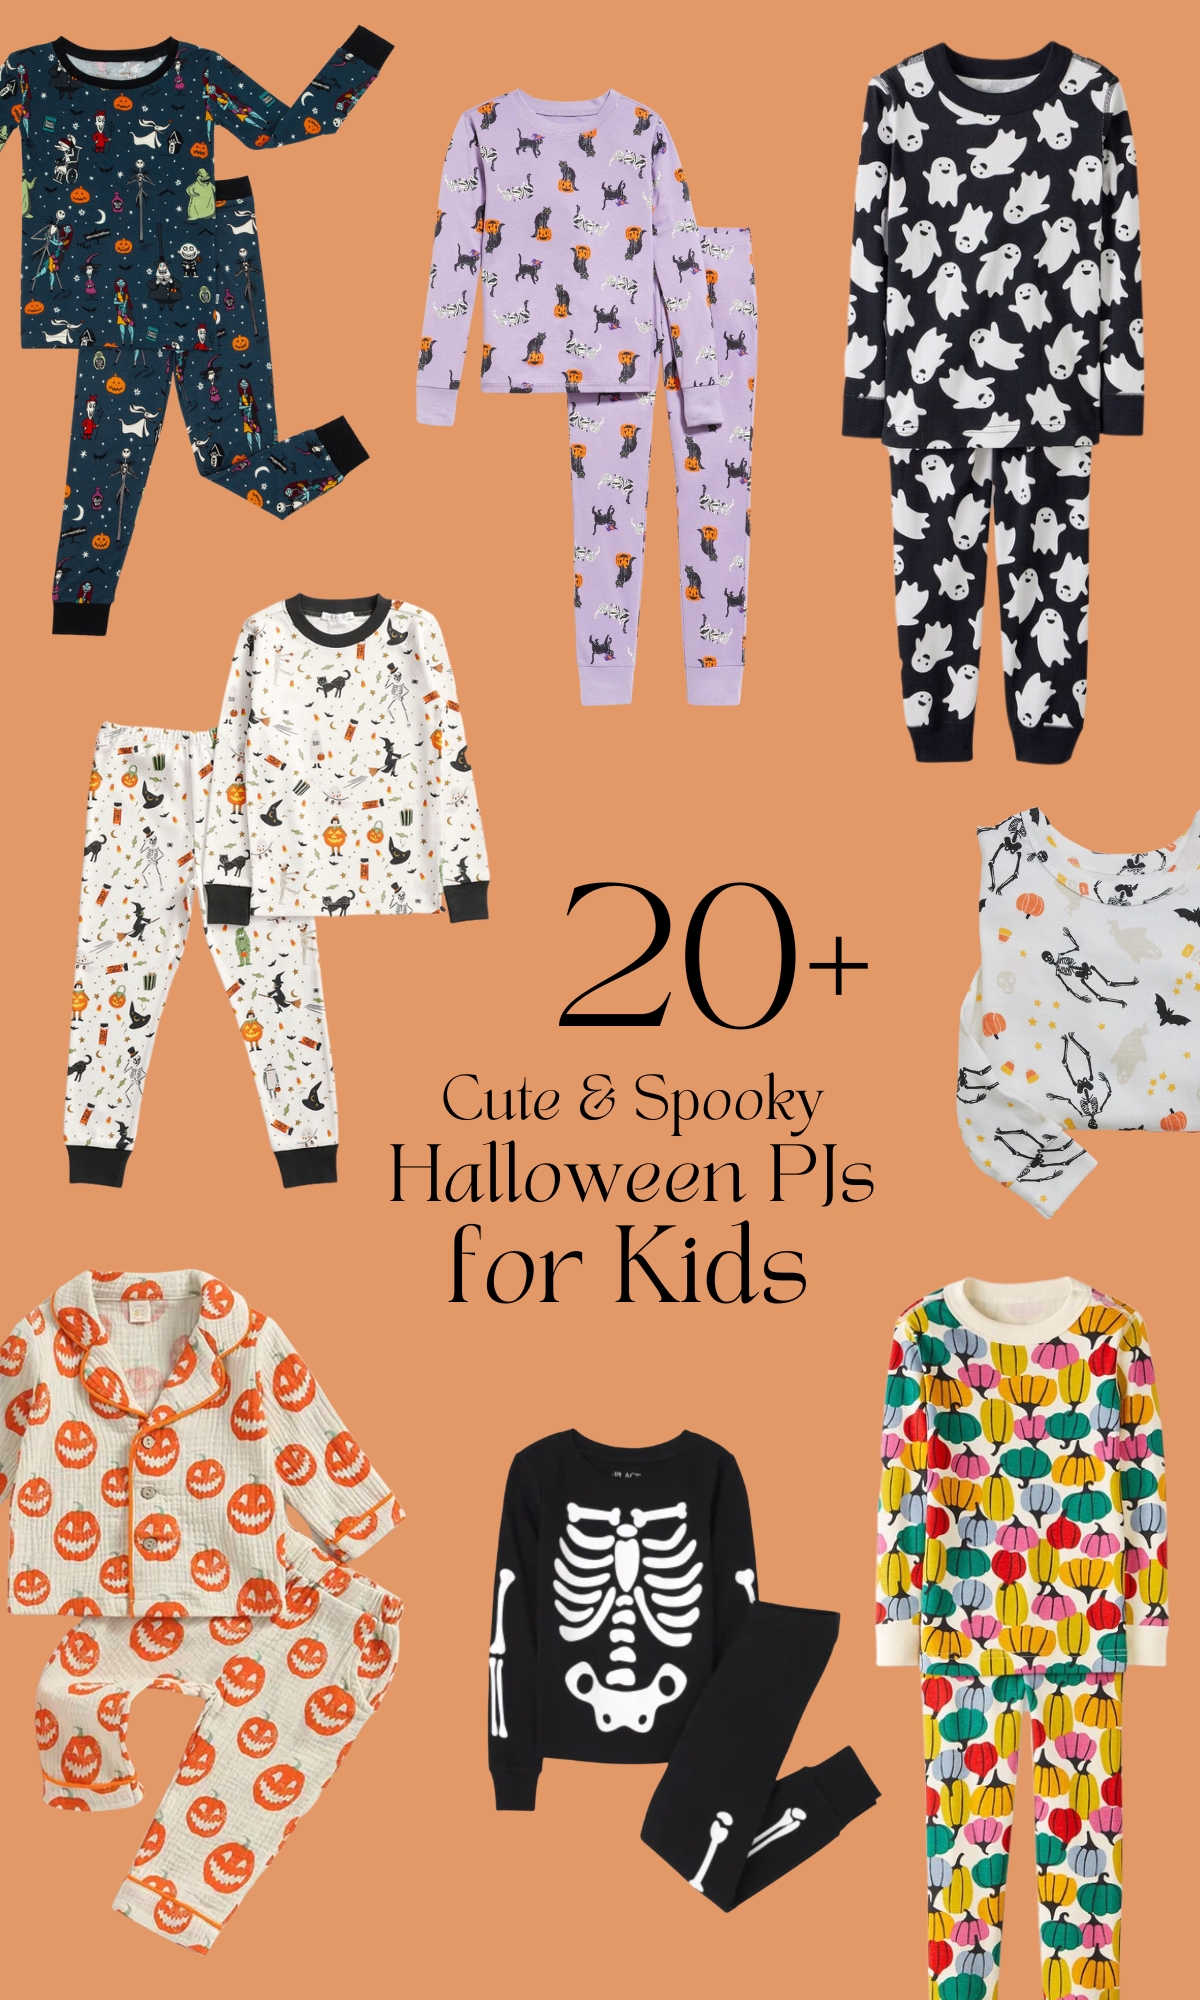 Boys Halloween Trick or Treat 2 Piece Pajama Set - Size 6